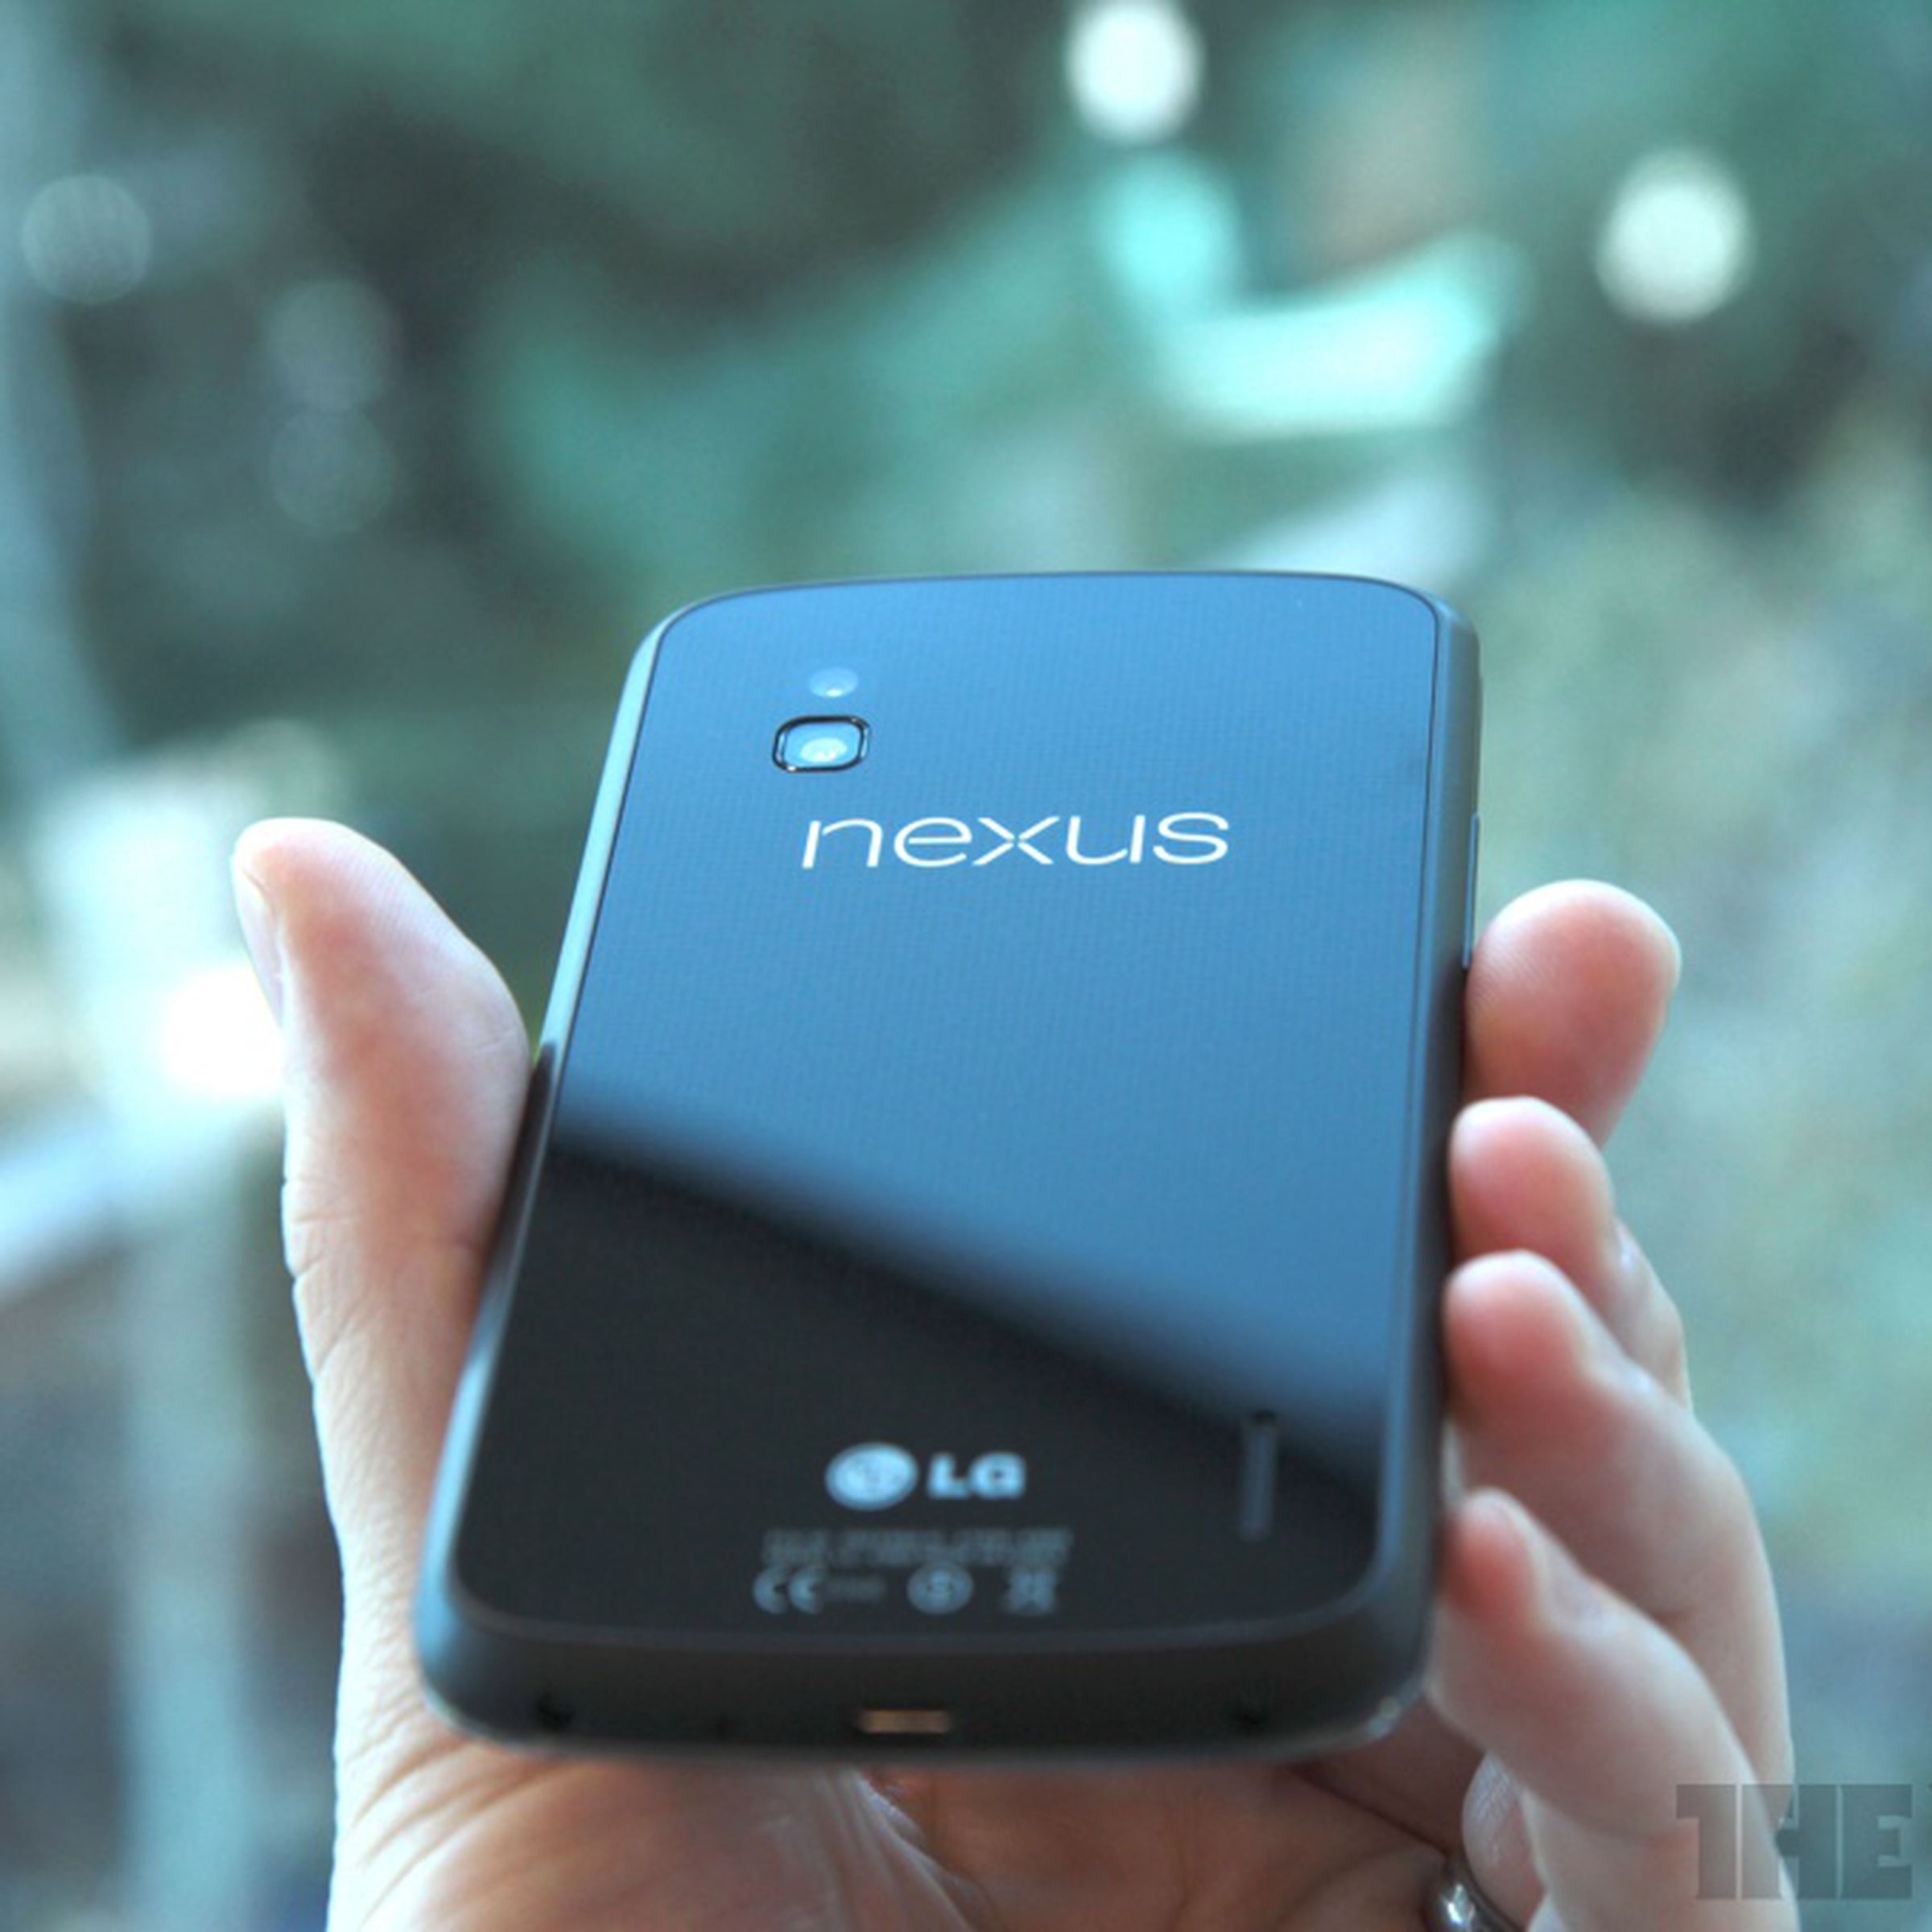 Gallery Photo: Nexus 4 hands-on photos